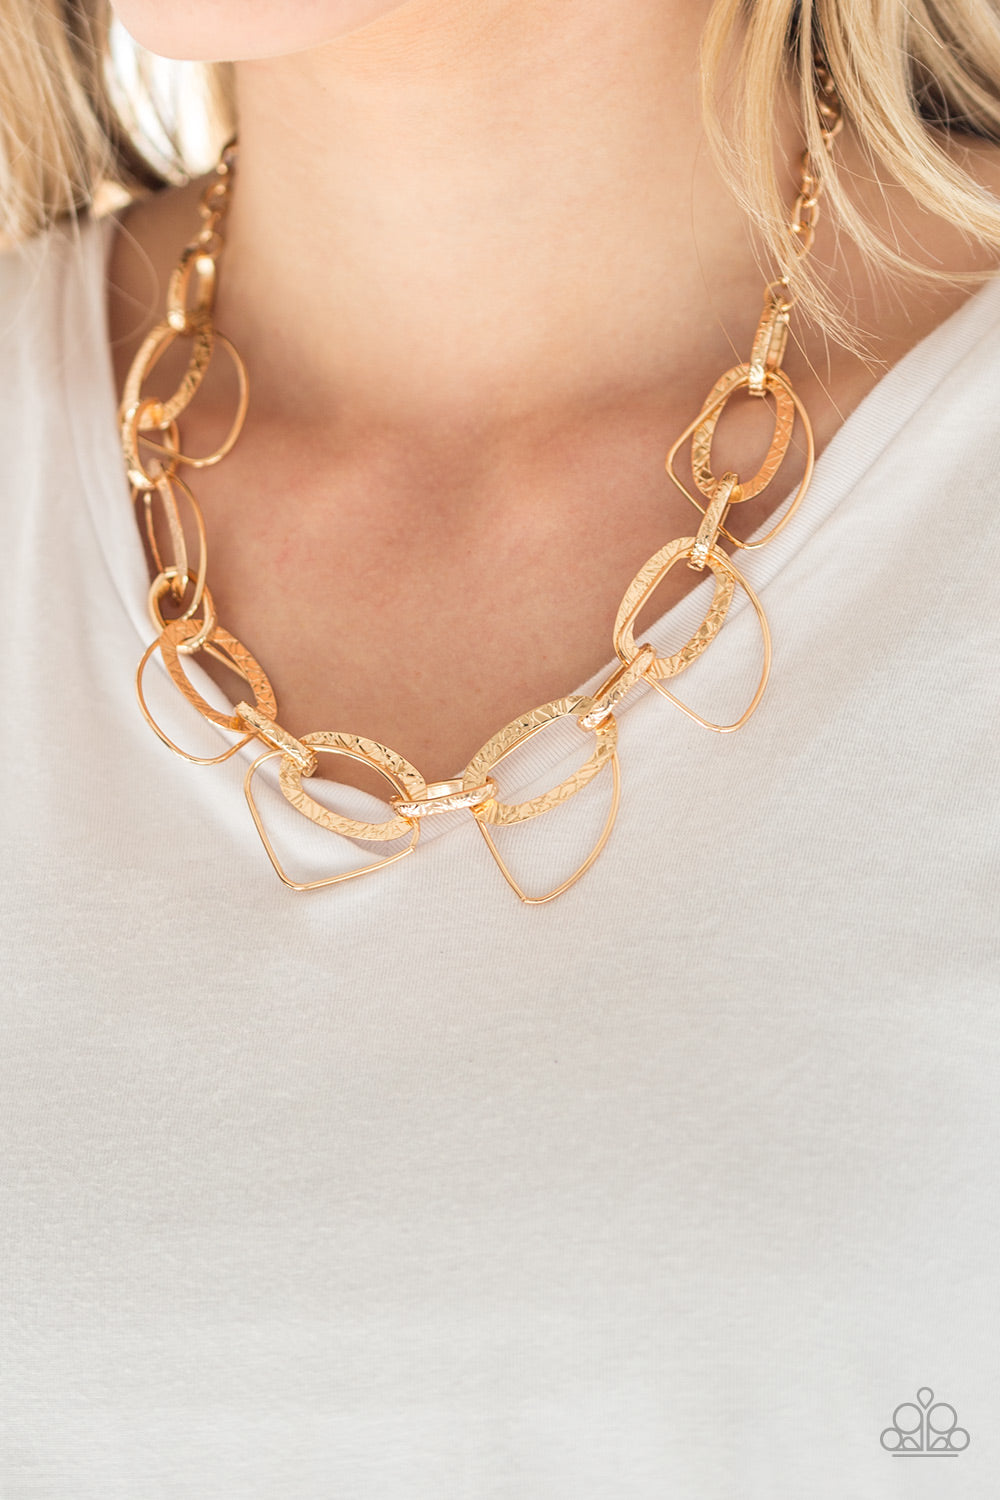 Very Avant-Garde - Gold necklace